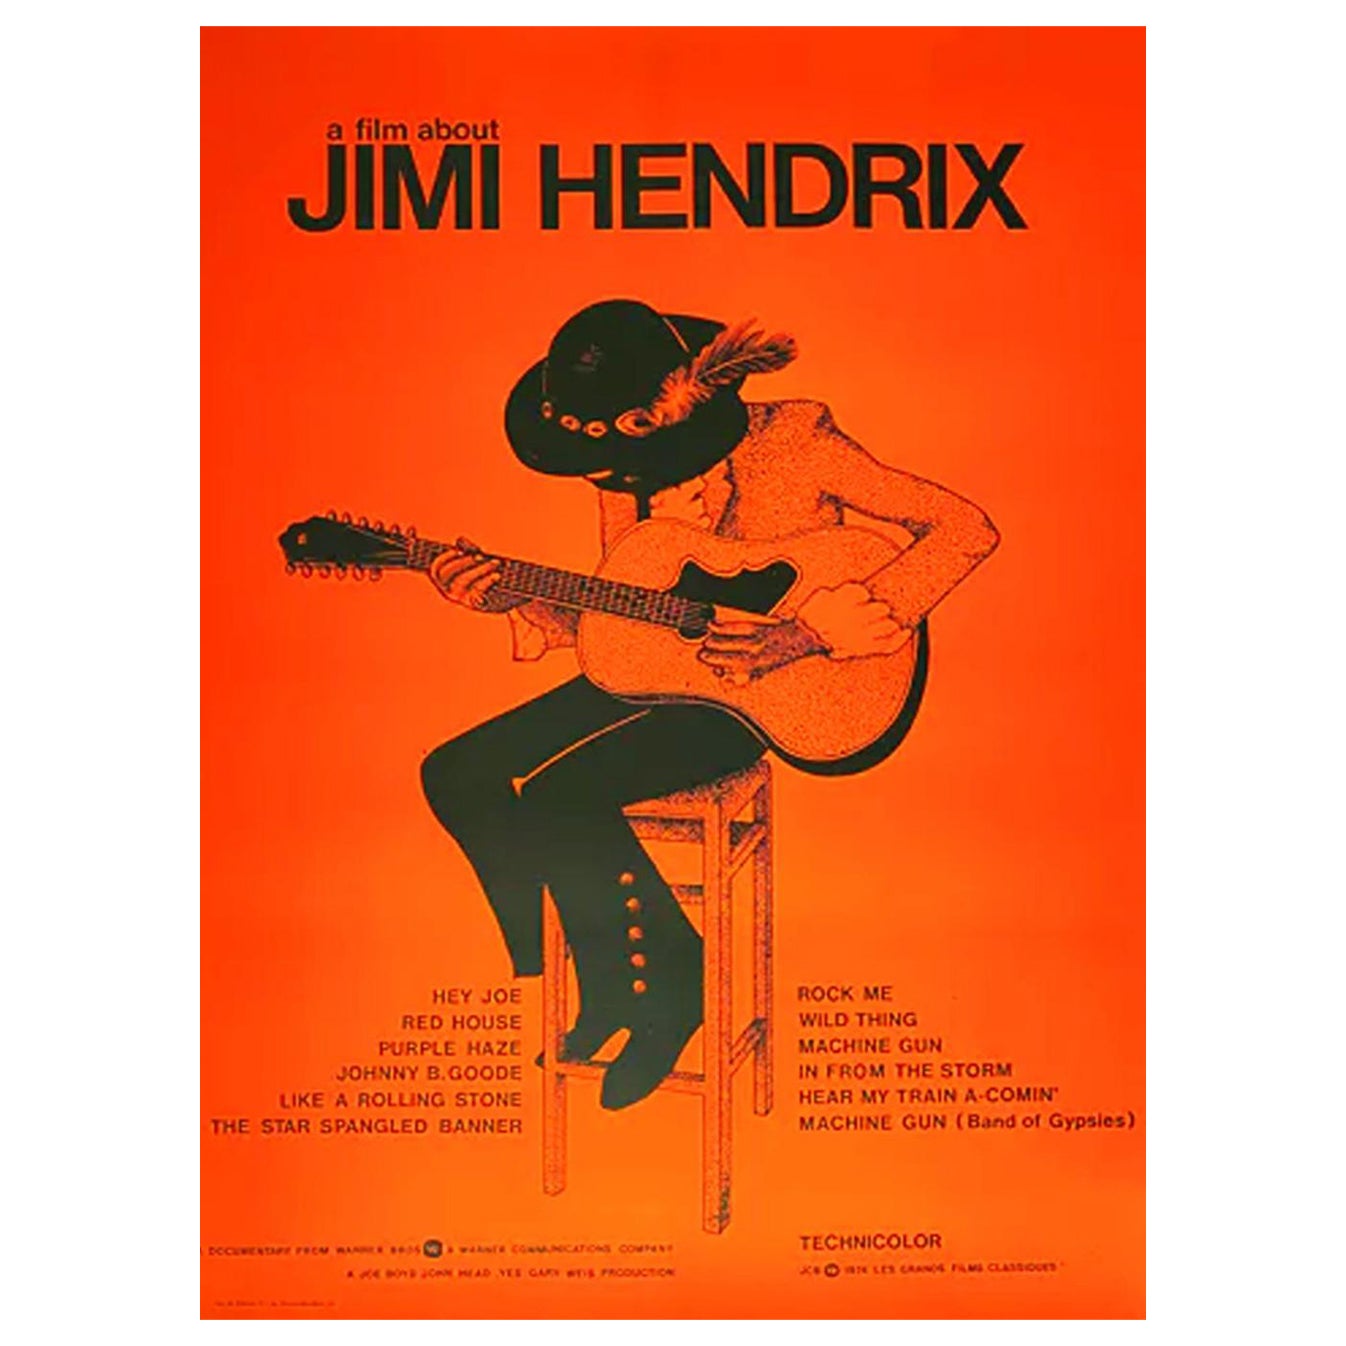 1973 Jimi Hendrix 'A Film About' Original Vintage Poster